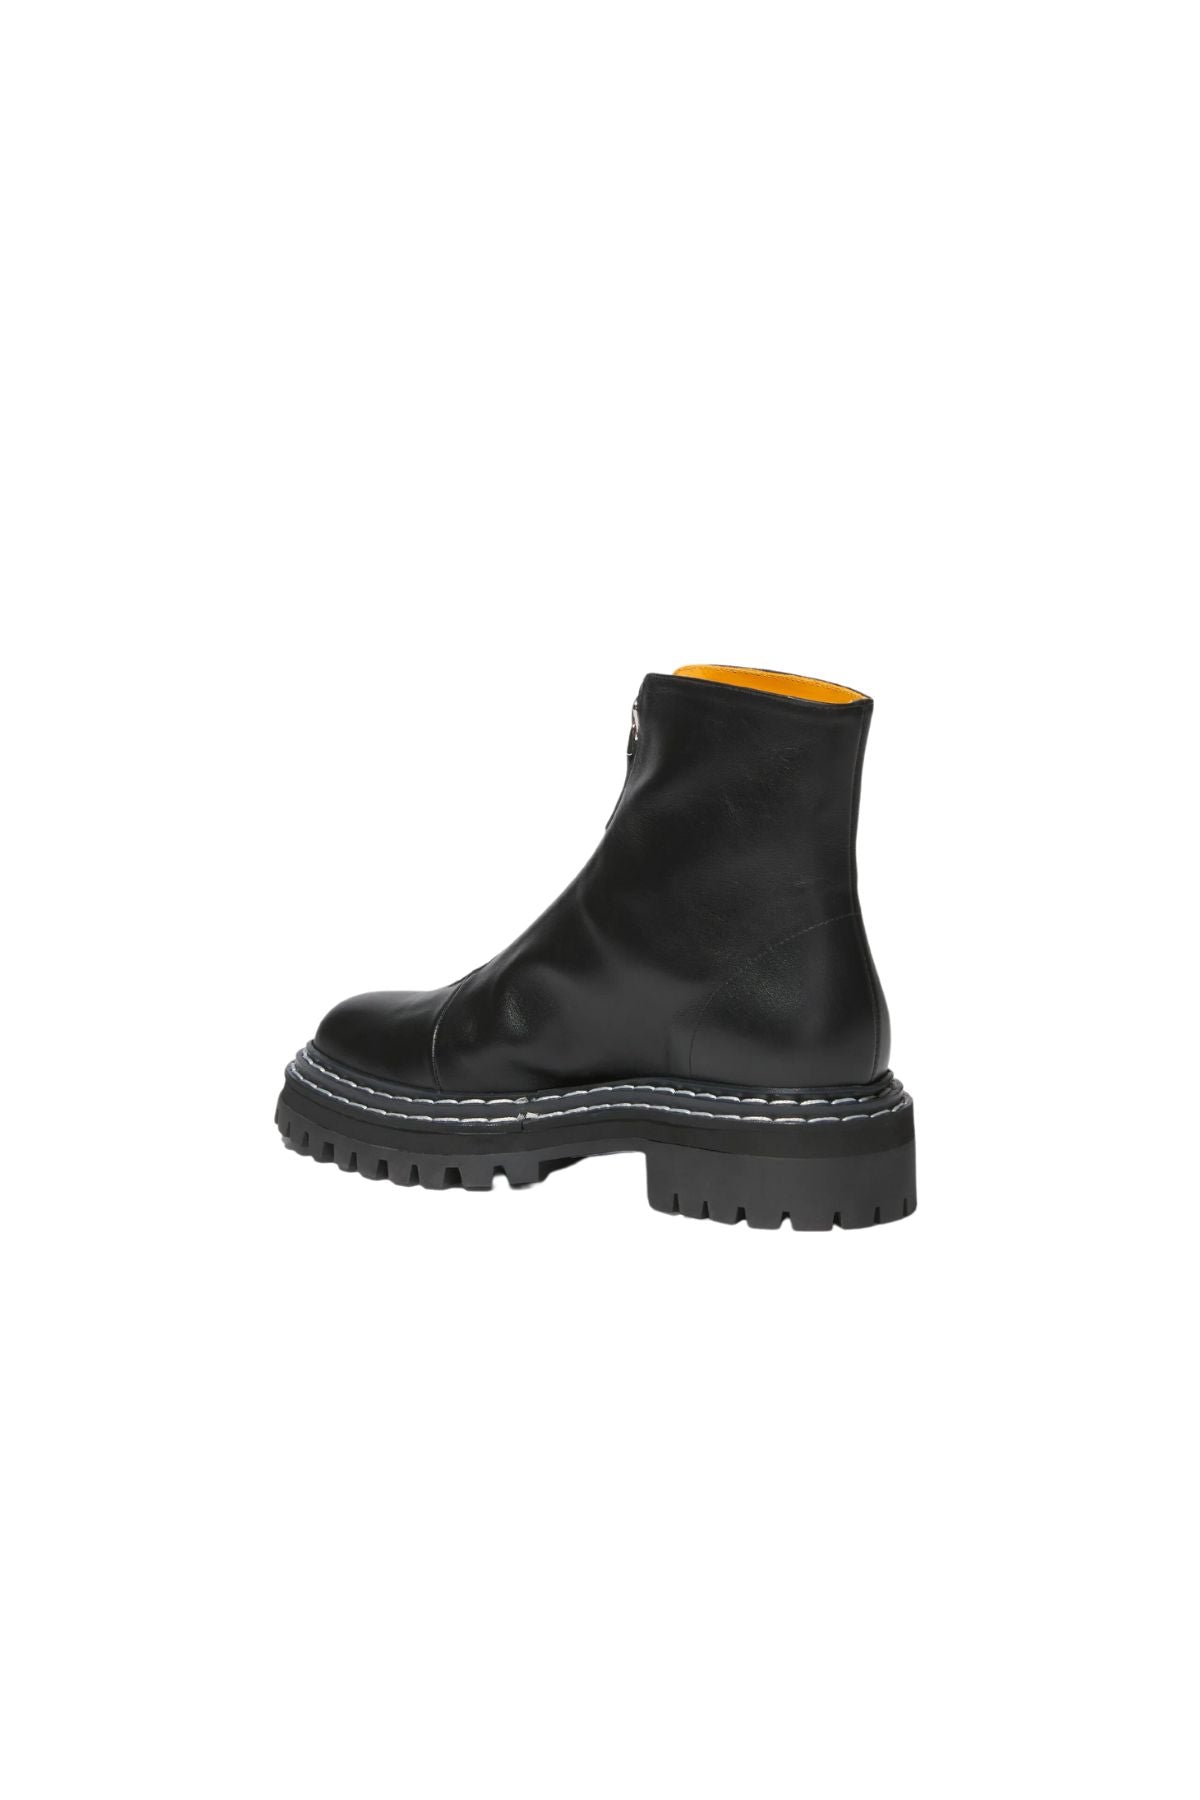 Proenza Schouler Lug Sole Zip Ankle Boots - Black